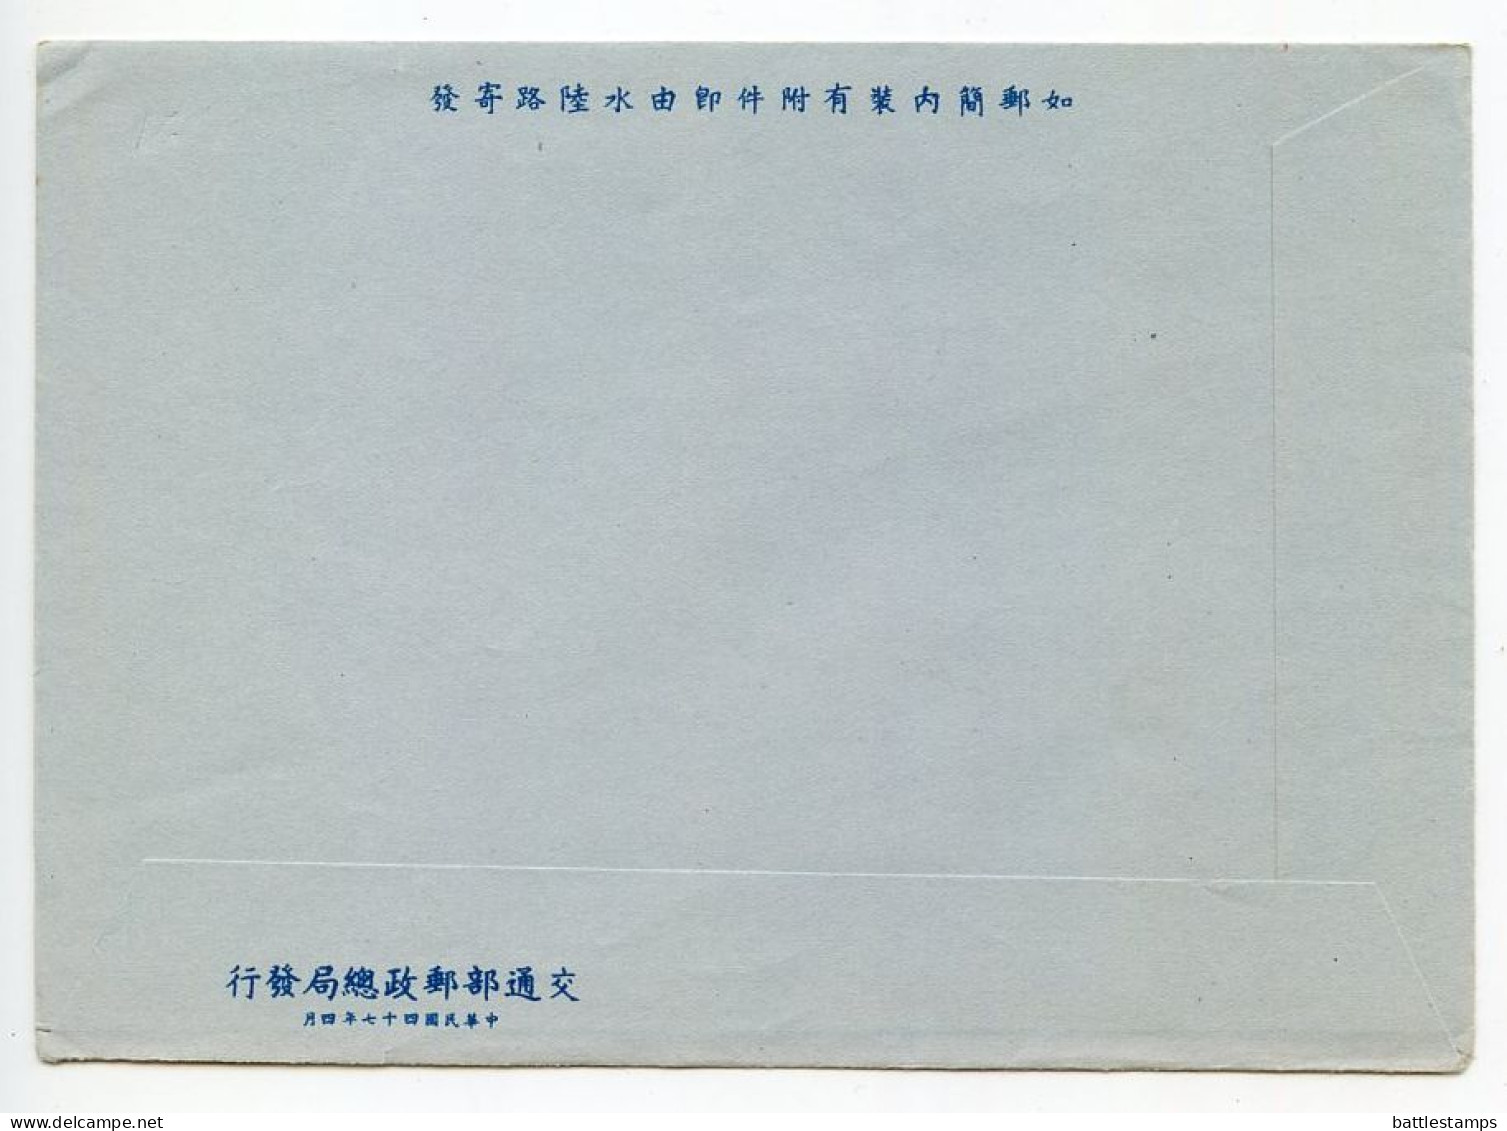 Taiwan / Republic Of China 1950's Mint Aerogramme - $1.50 Airplane - Ganzsachen